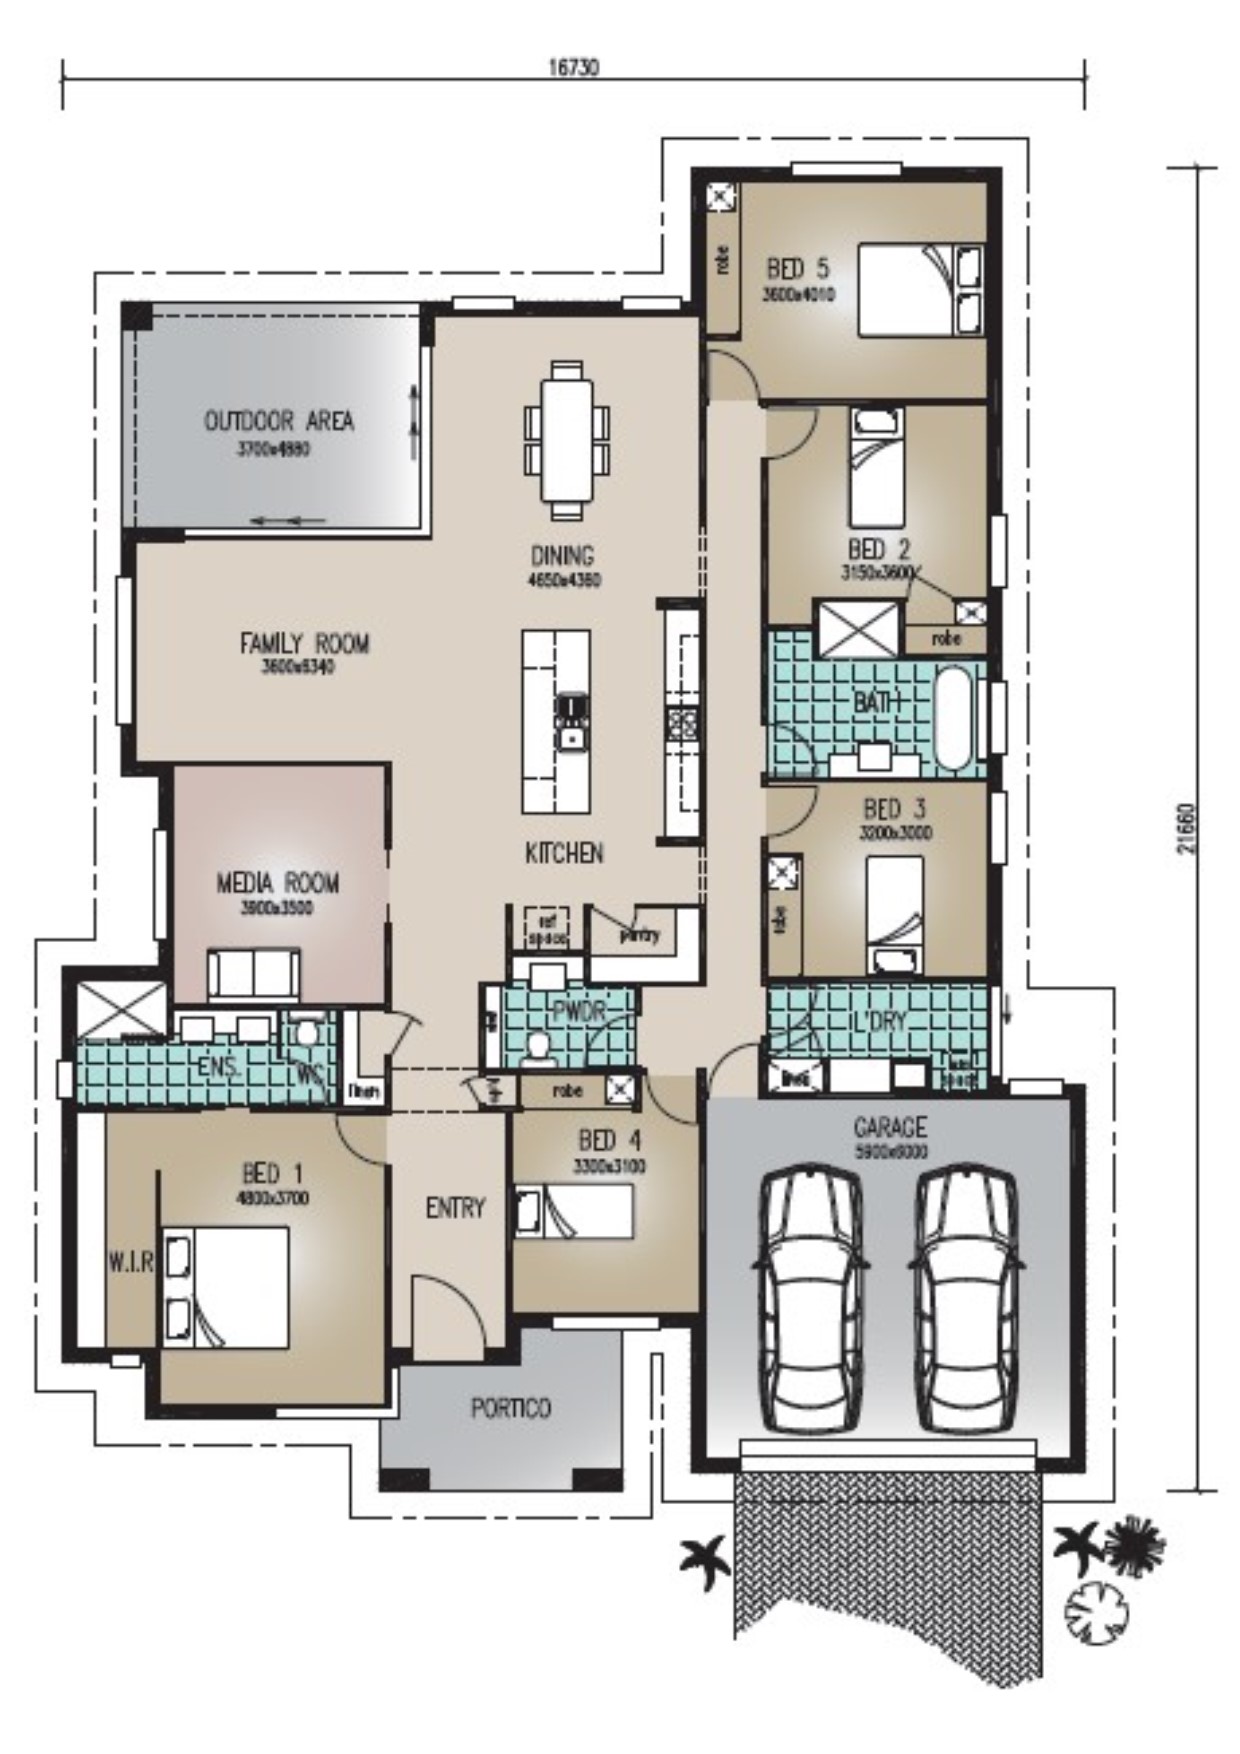 5 Bedroom Home Plans Richard Adams